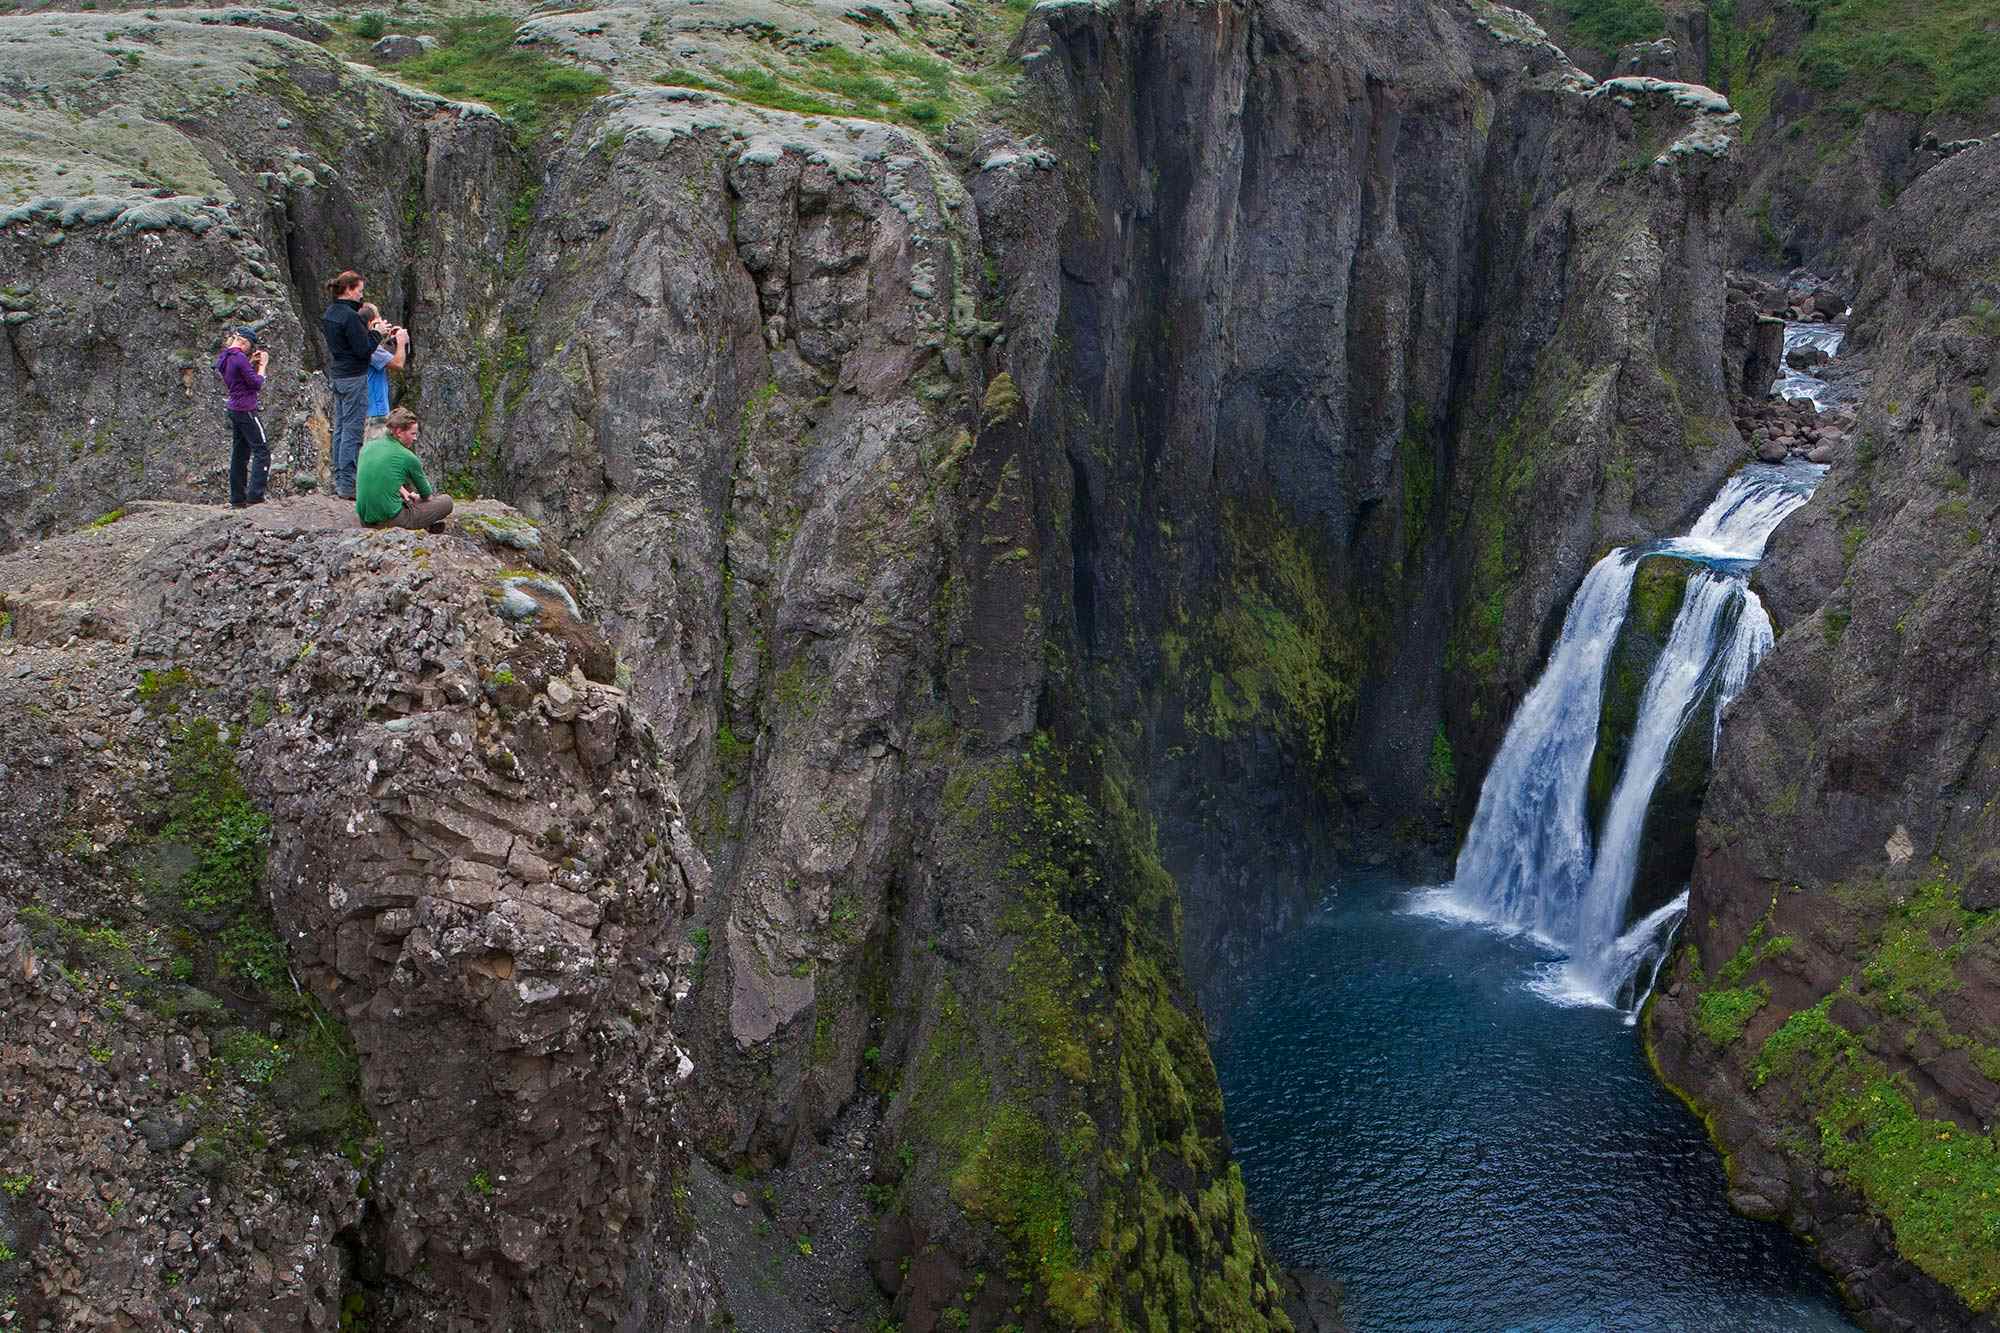 Tvílitihylur waterfall, Iceland. Photo: Host/Icelandic Mountain Guides